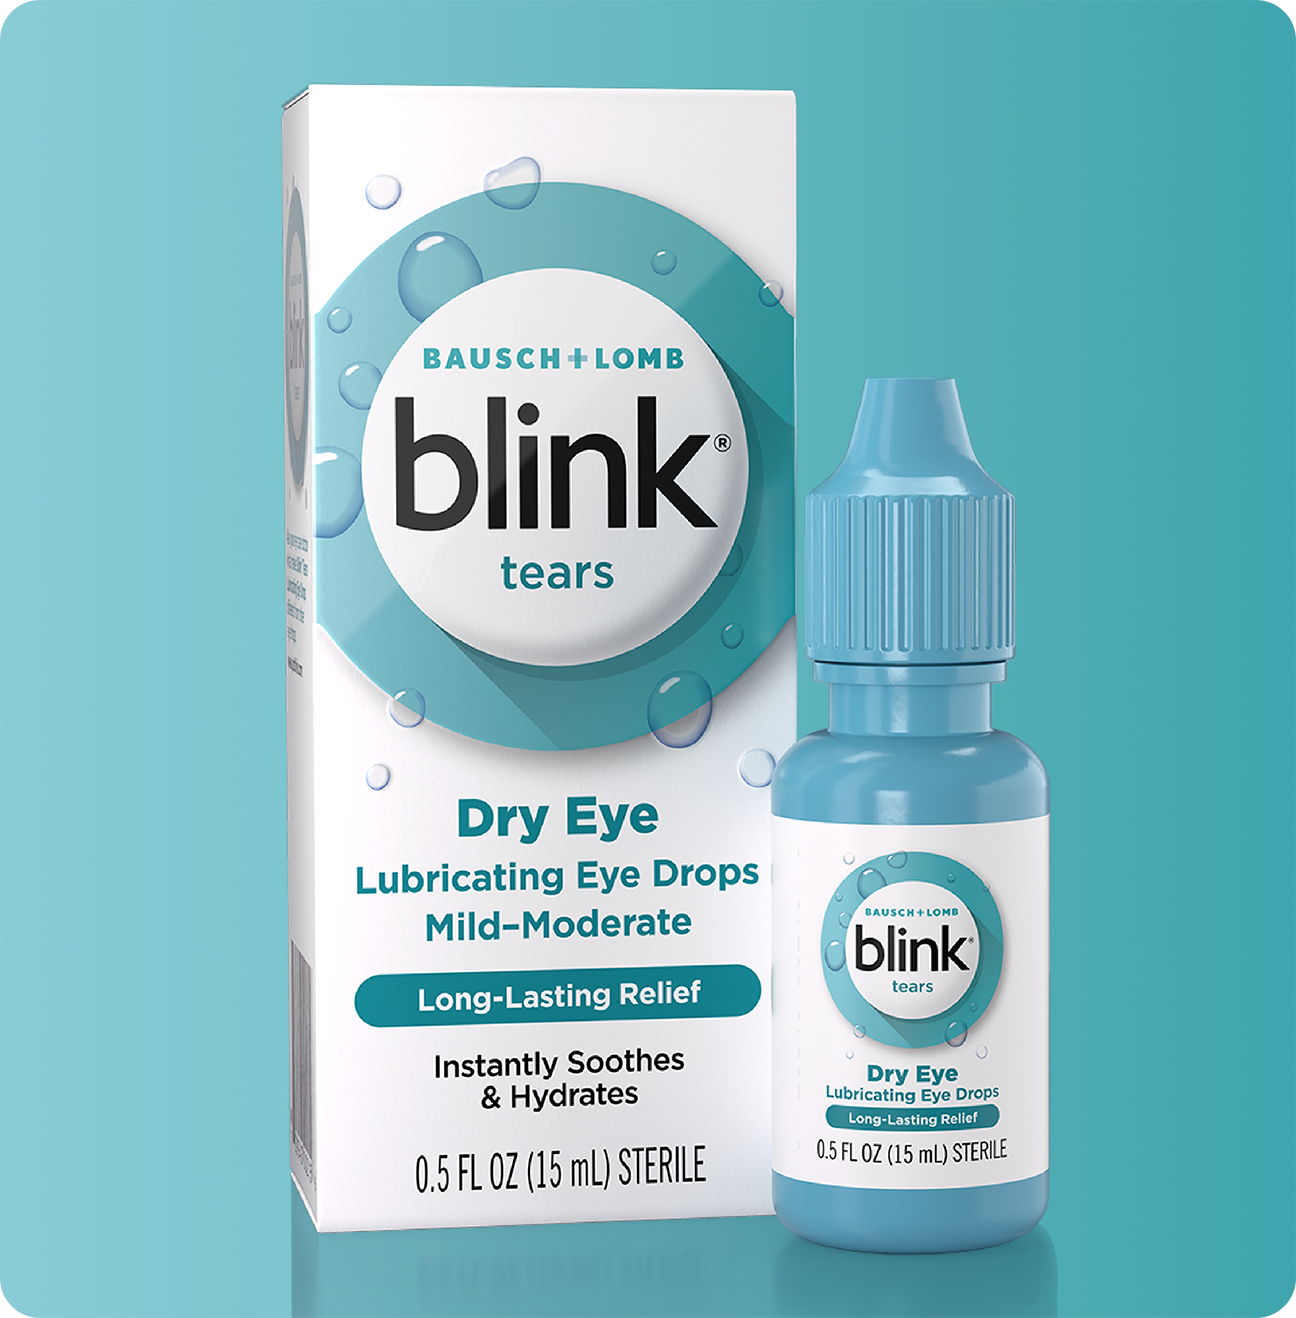 Blink Tears Lubricating Eye Drops bottle and carton